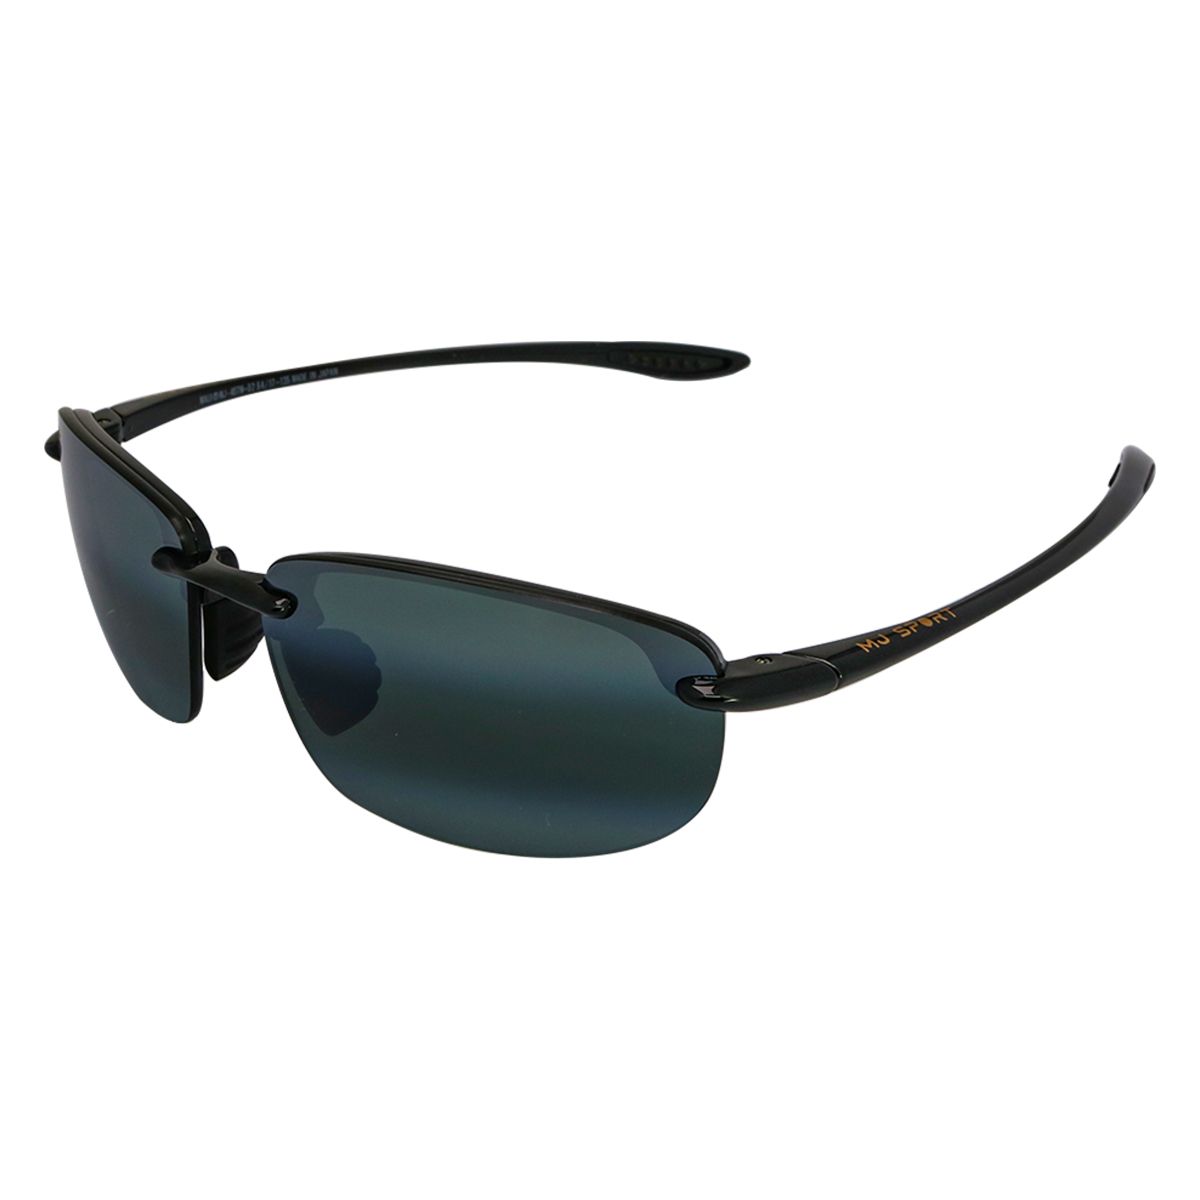 MJ407N Oval Sunglasses 2 - size 64